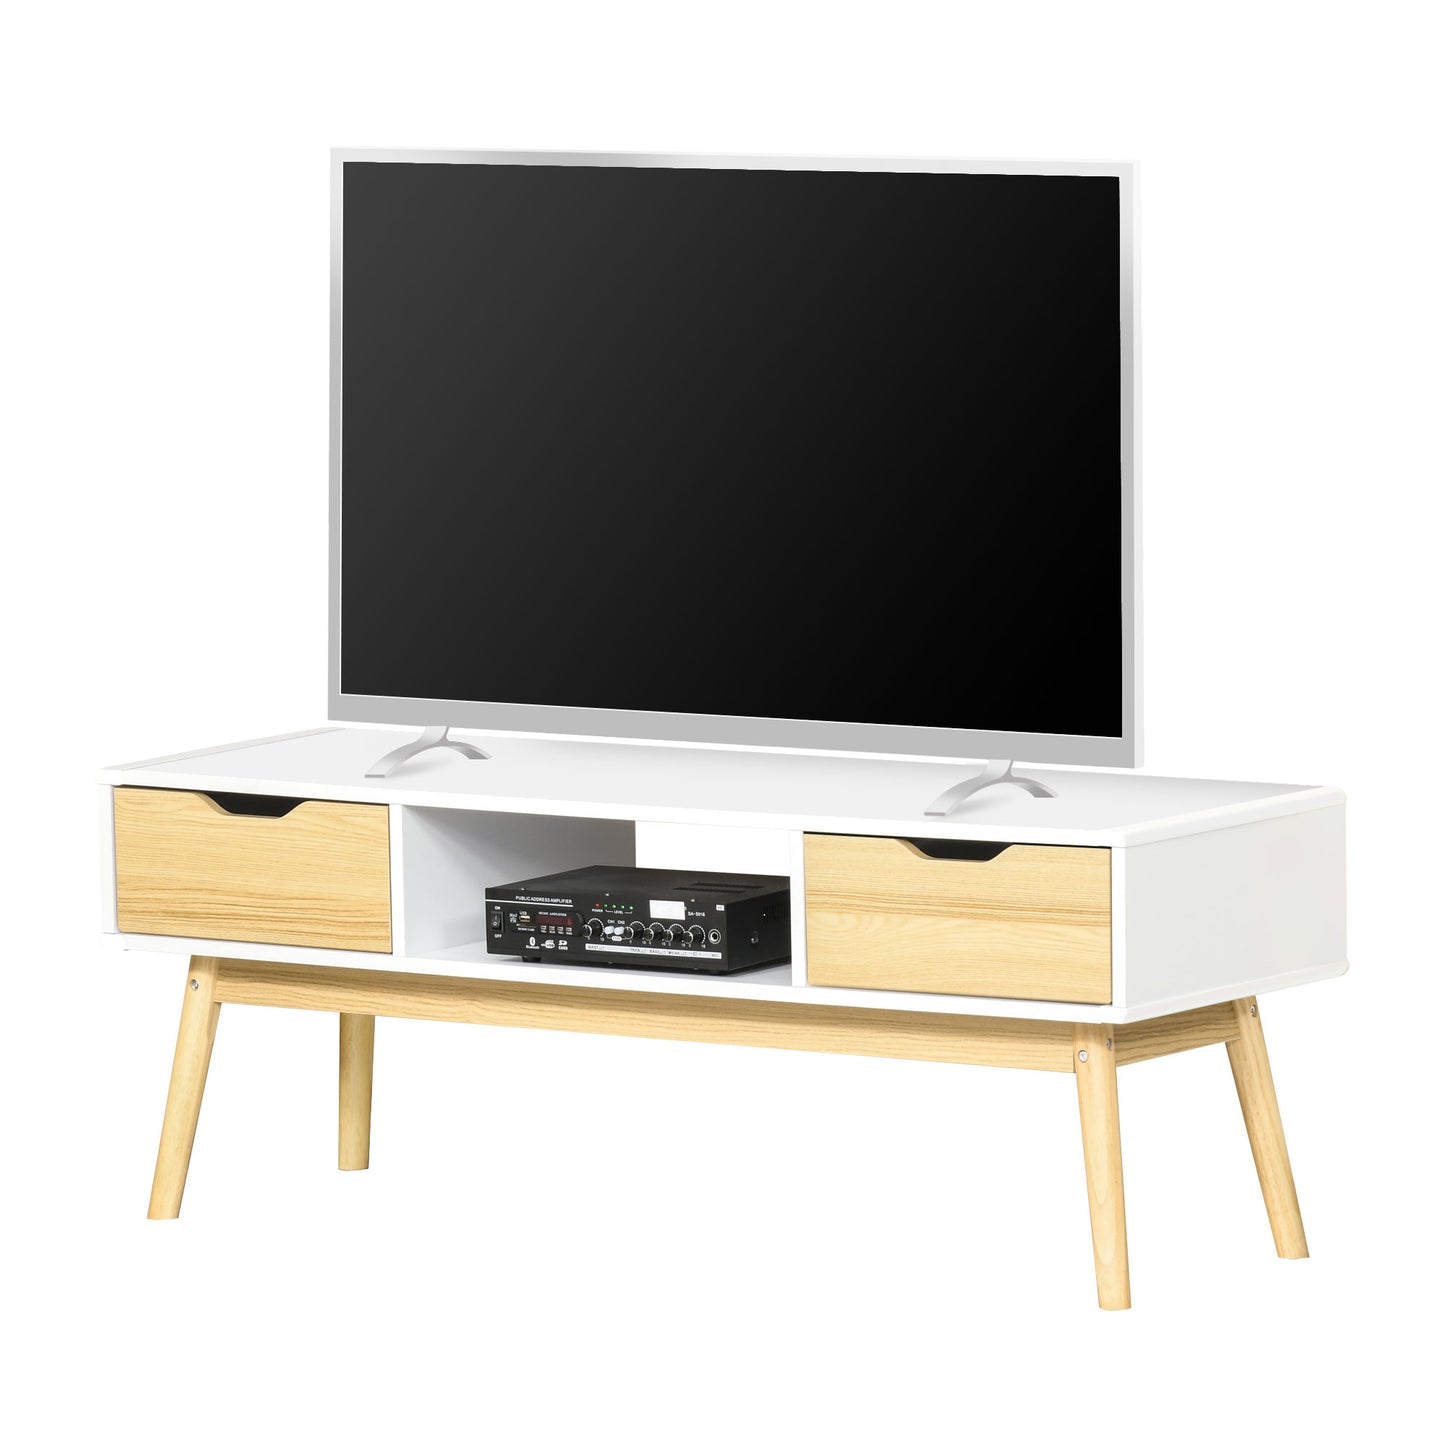 HOMCOM TV Stand Media Unit Cabinet w/ Open Shelf Drawers Storage Entertainment Center